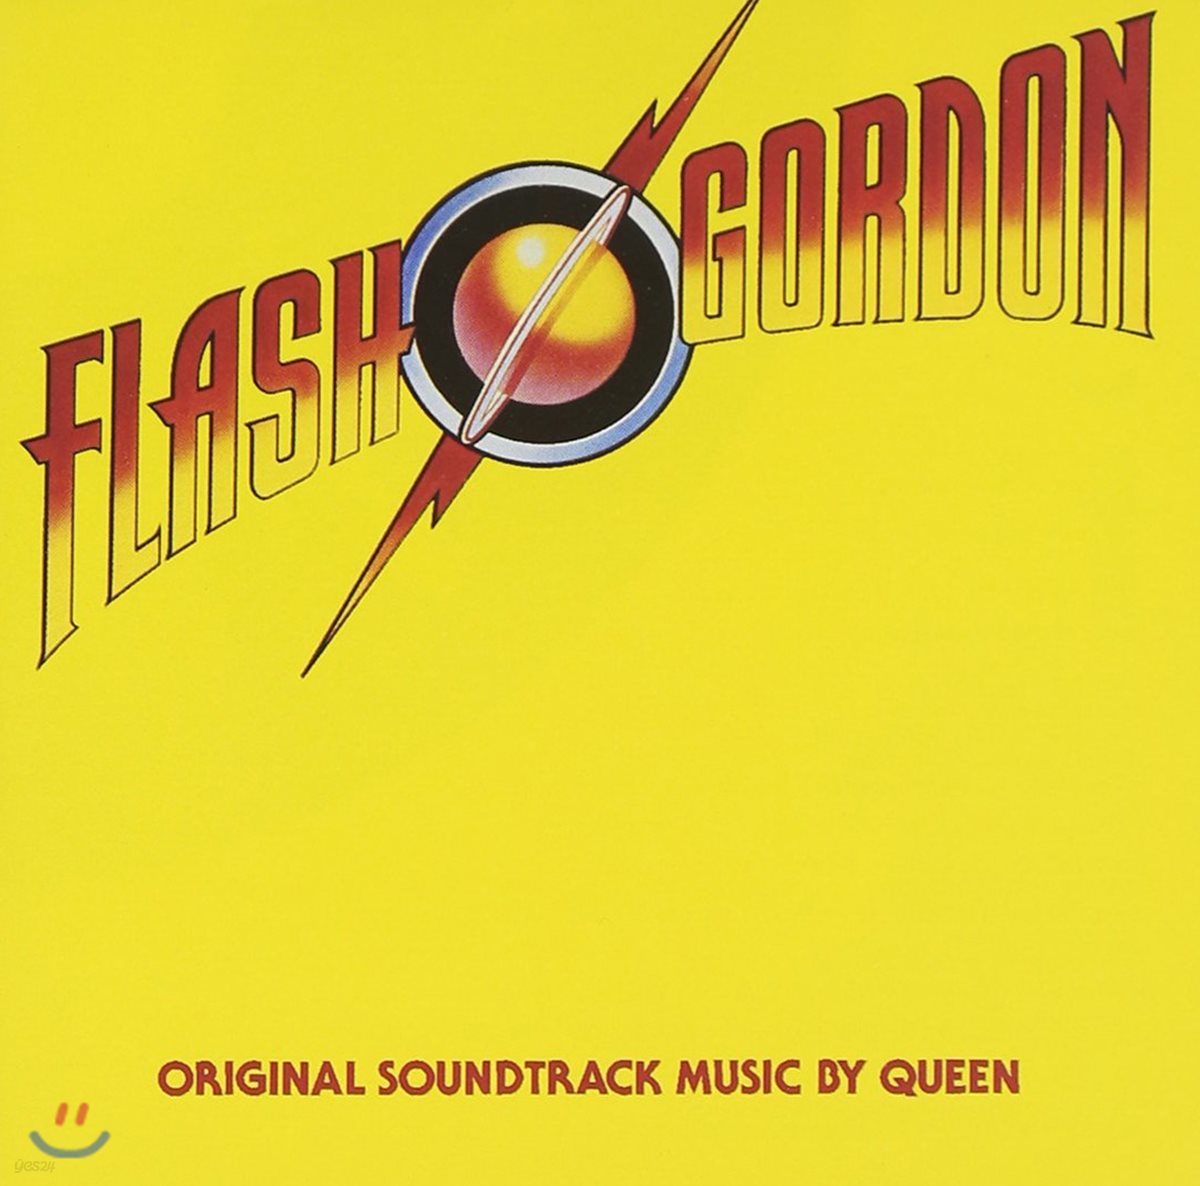 Queen - Flash Gordon 제국의 종말 OST [Deluxe Edition]